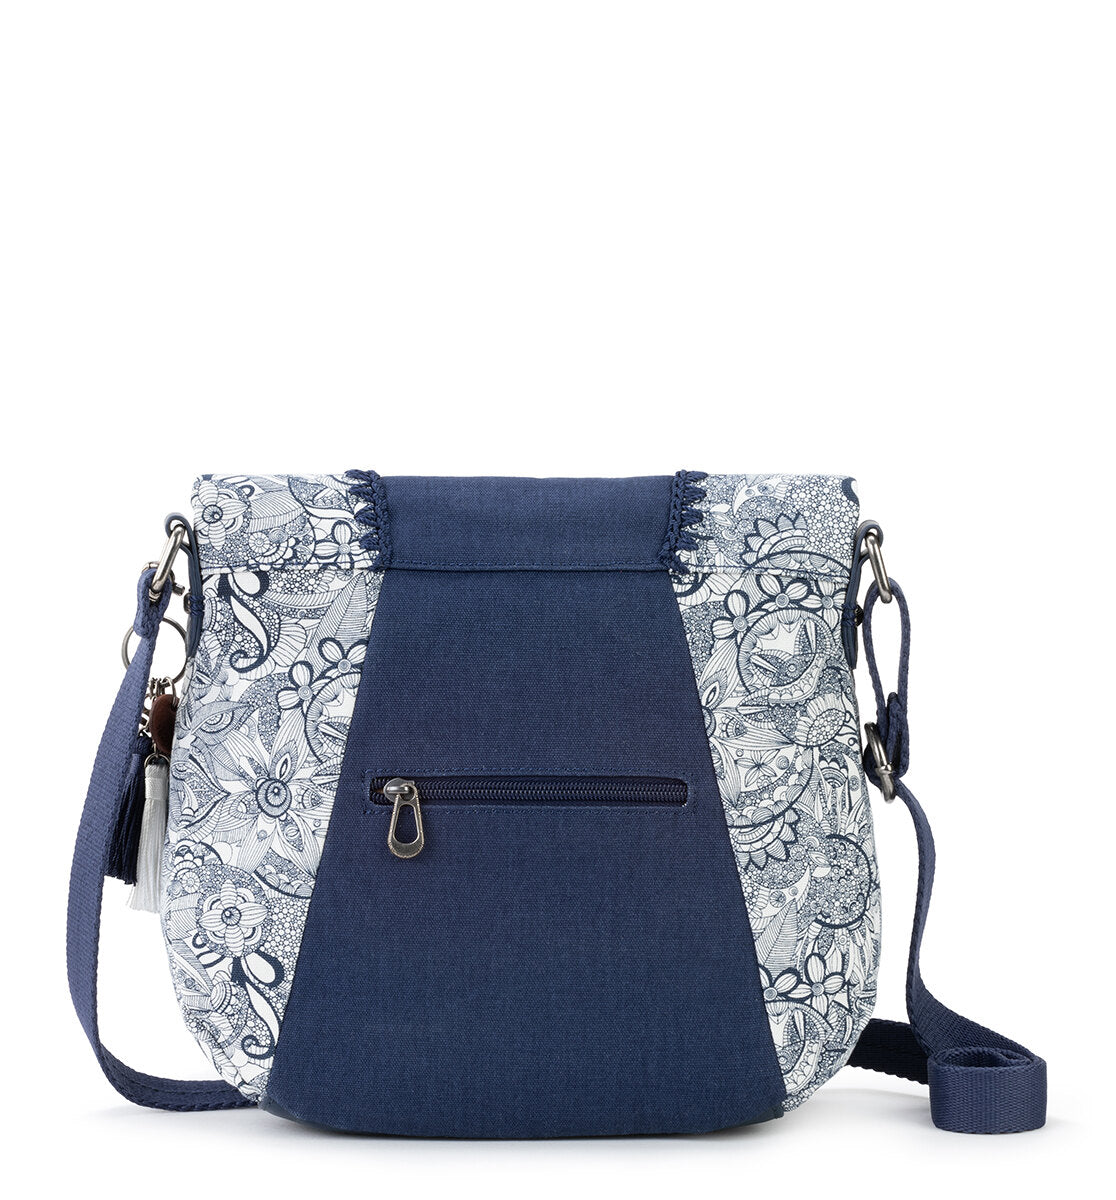 Xmarks Women Storage Bags Case For Mobile Phones Bags Multi-purpose Makeup  Wallet Crossbody Bag Handbags Pouch Belt Shoulder 